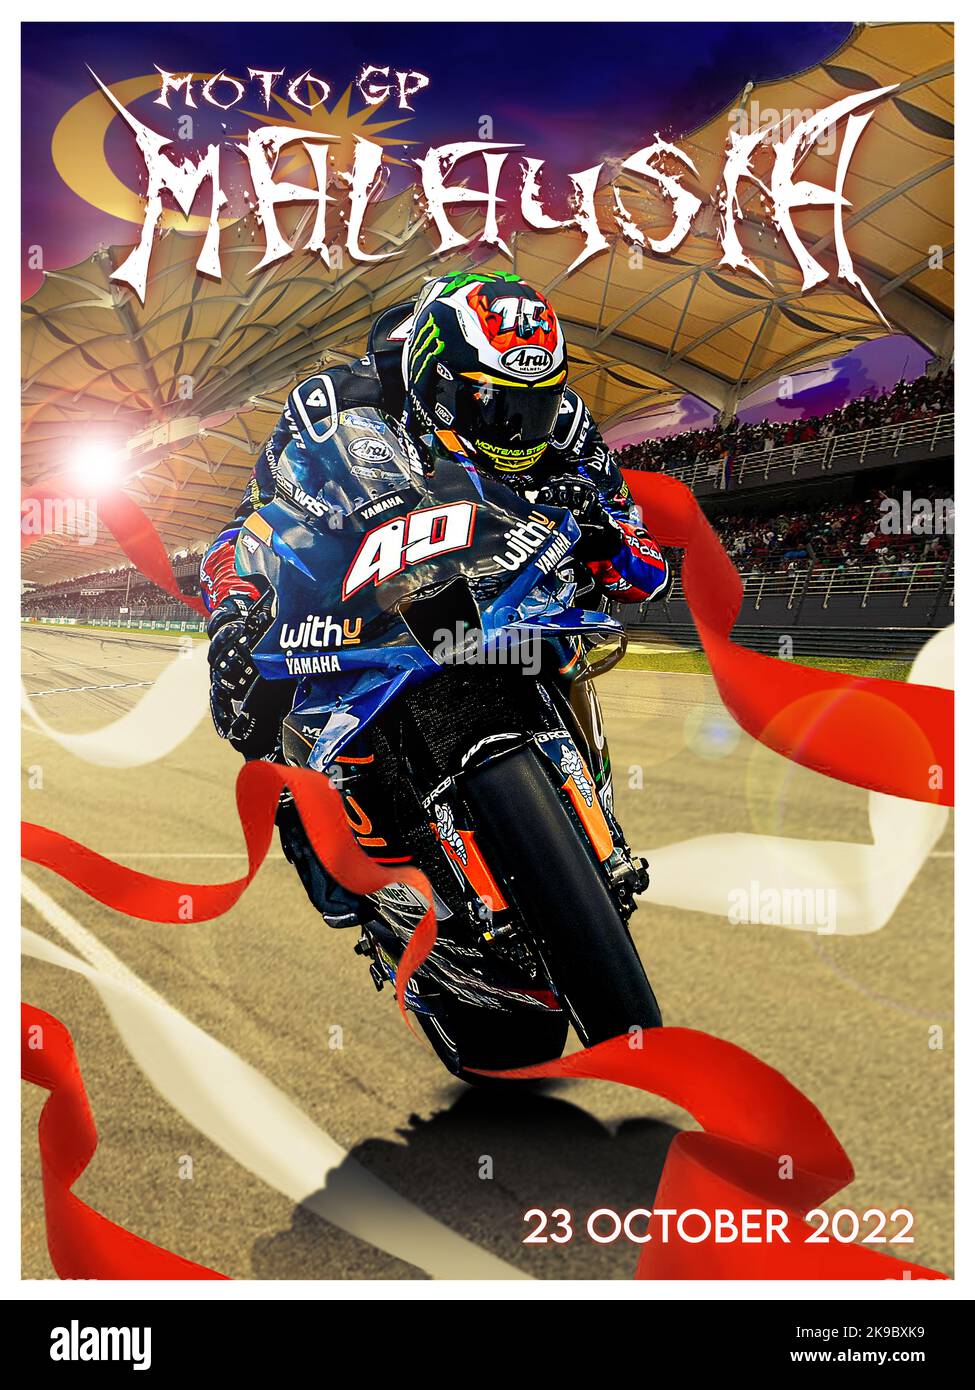 Malaysia Moto GP 2022 Race Poster Stock Photo